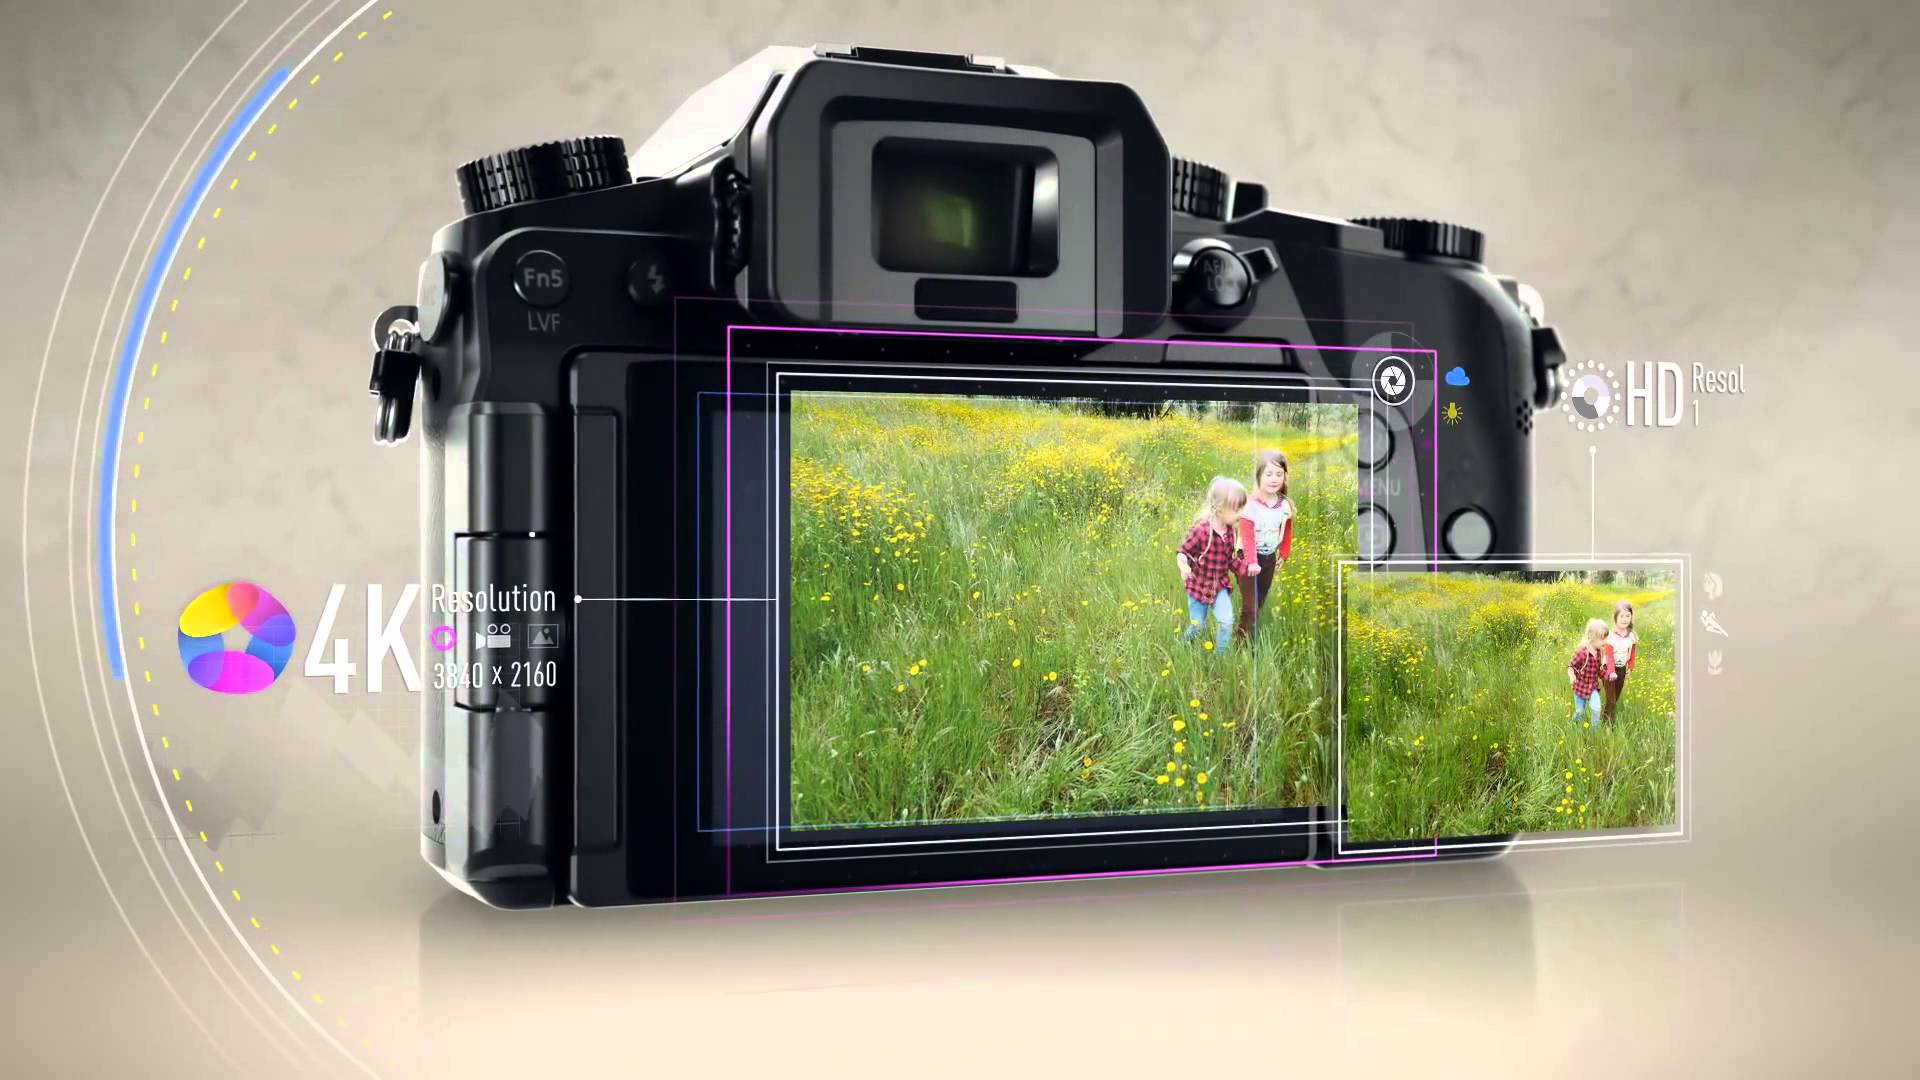 Panasonic LUMIX DMC-G7 A Digital Single Lens Mirrorless Camera – Features Video